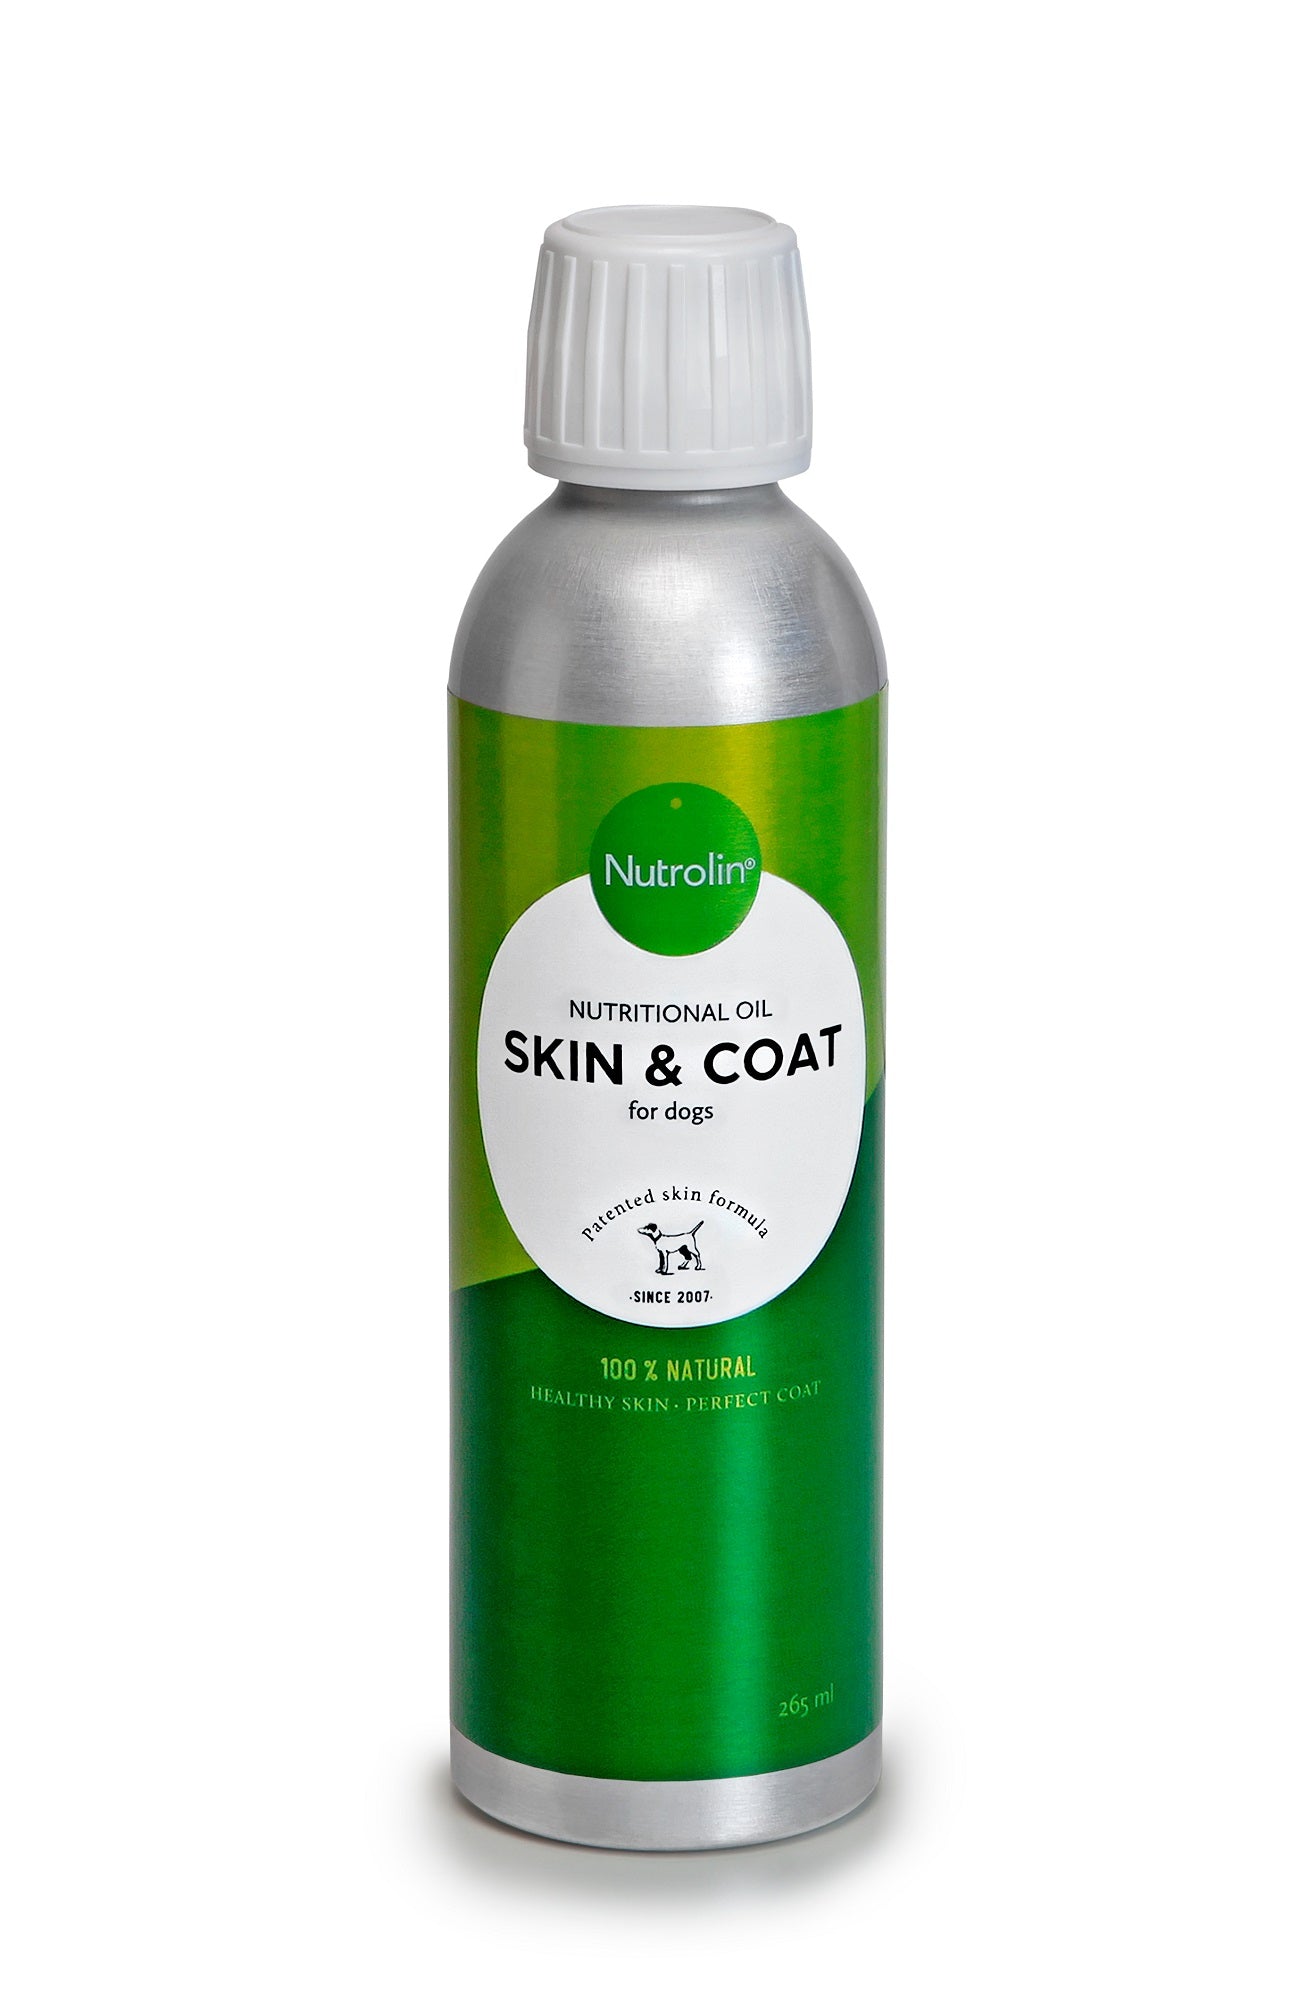 Nutrolin Skin & Coat